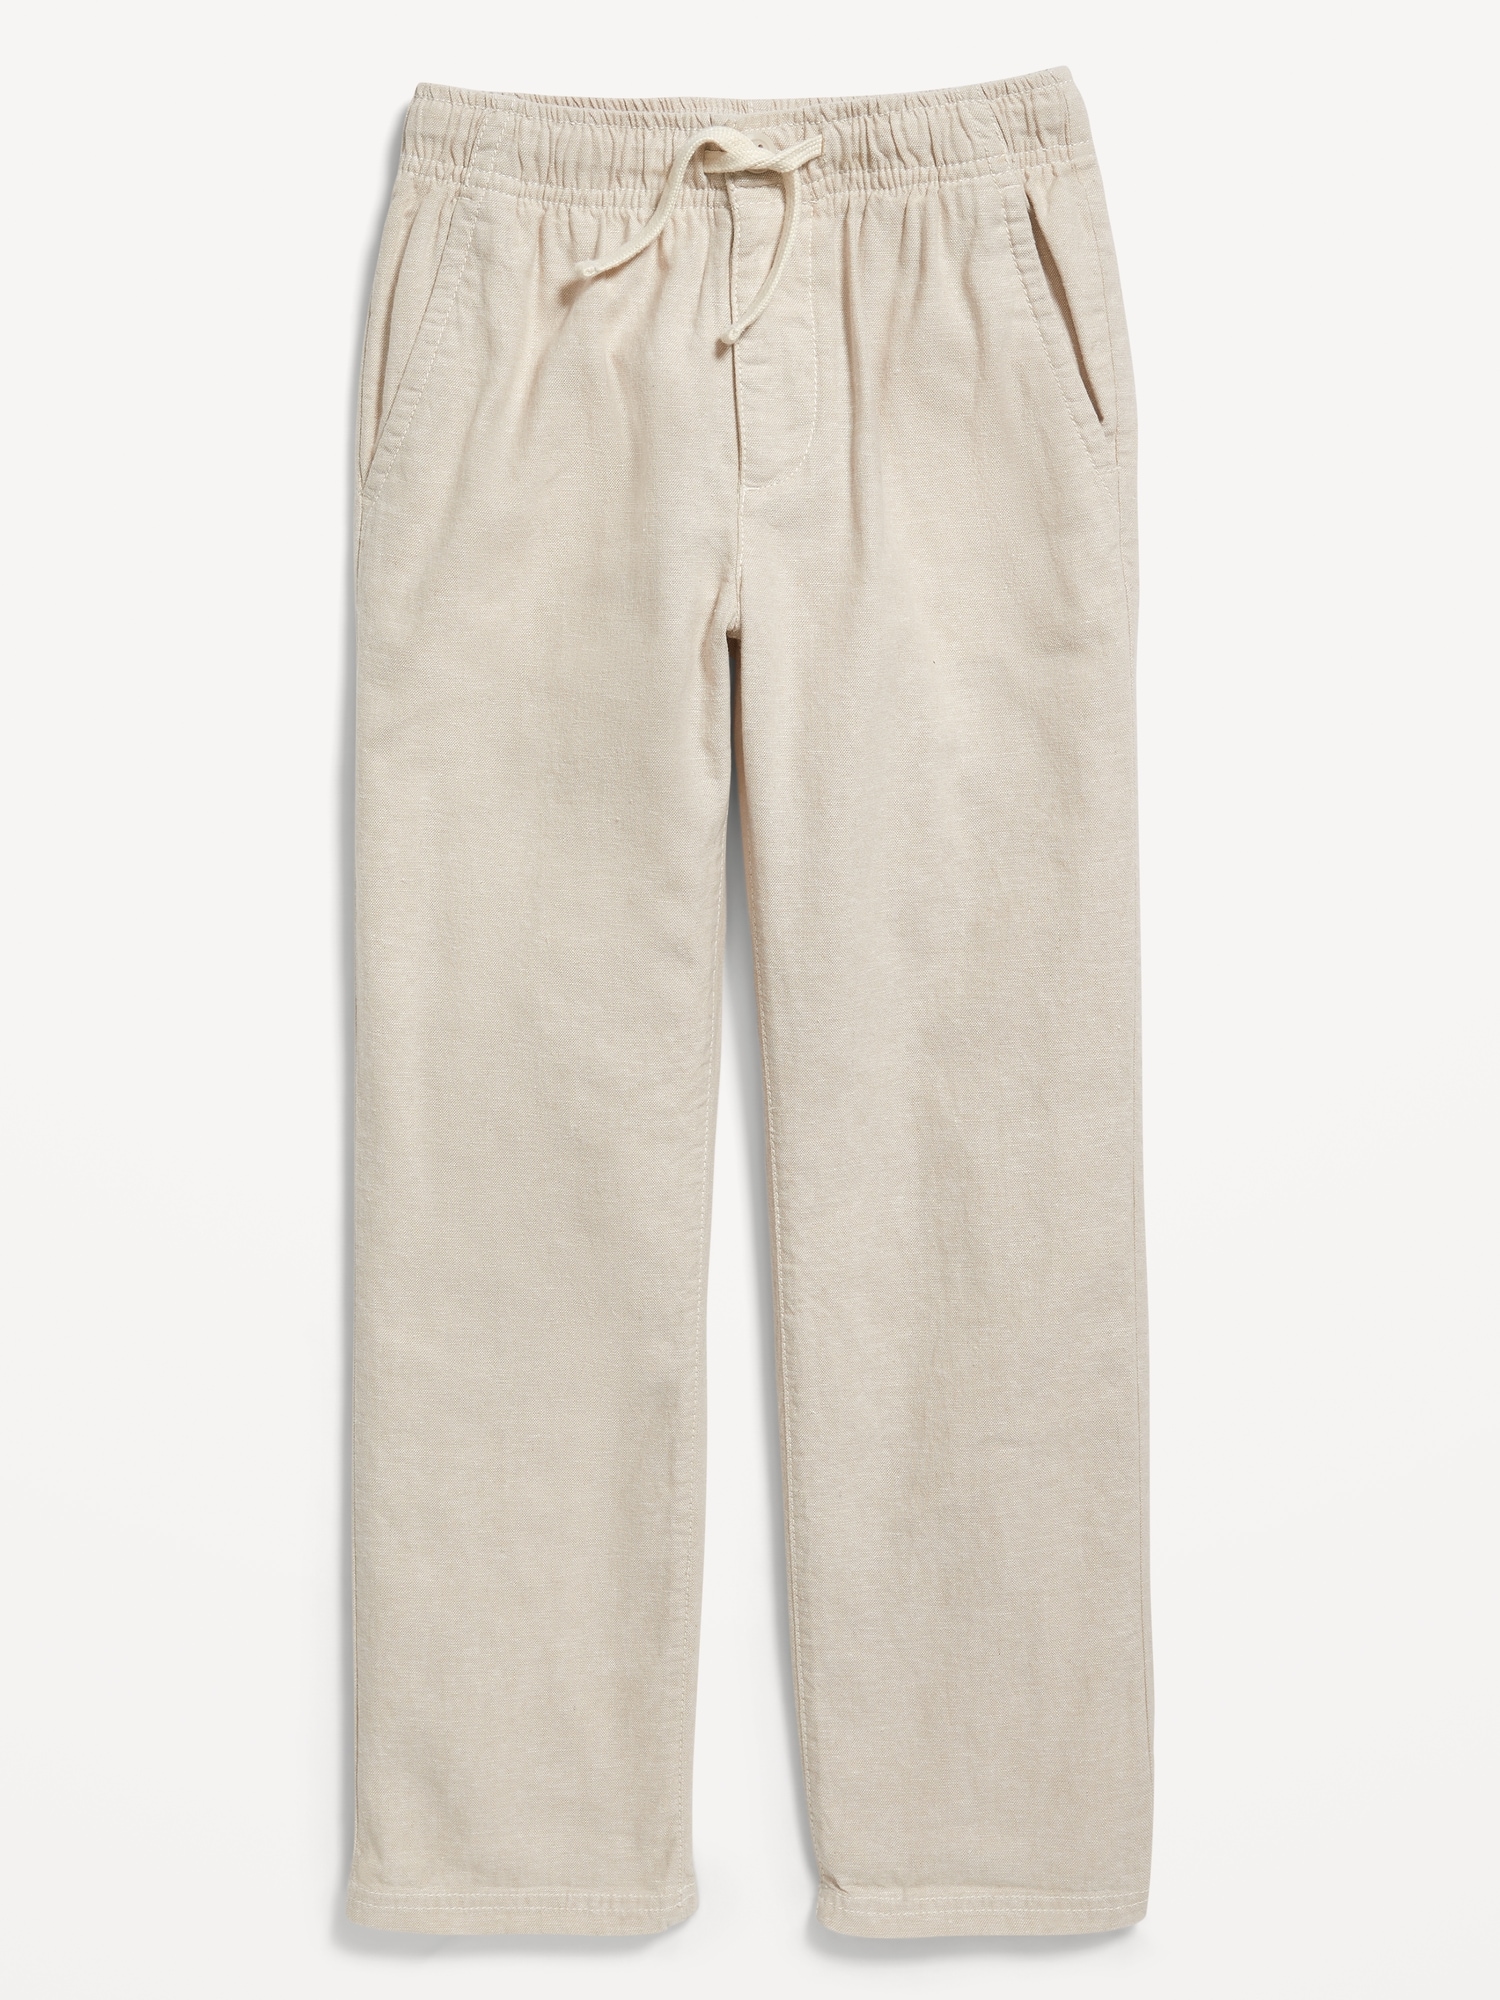 Straight Pull-On Linen-Blend Pants for Boys | Old Navy